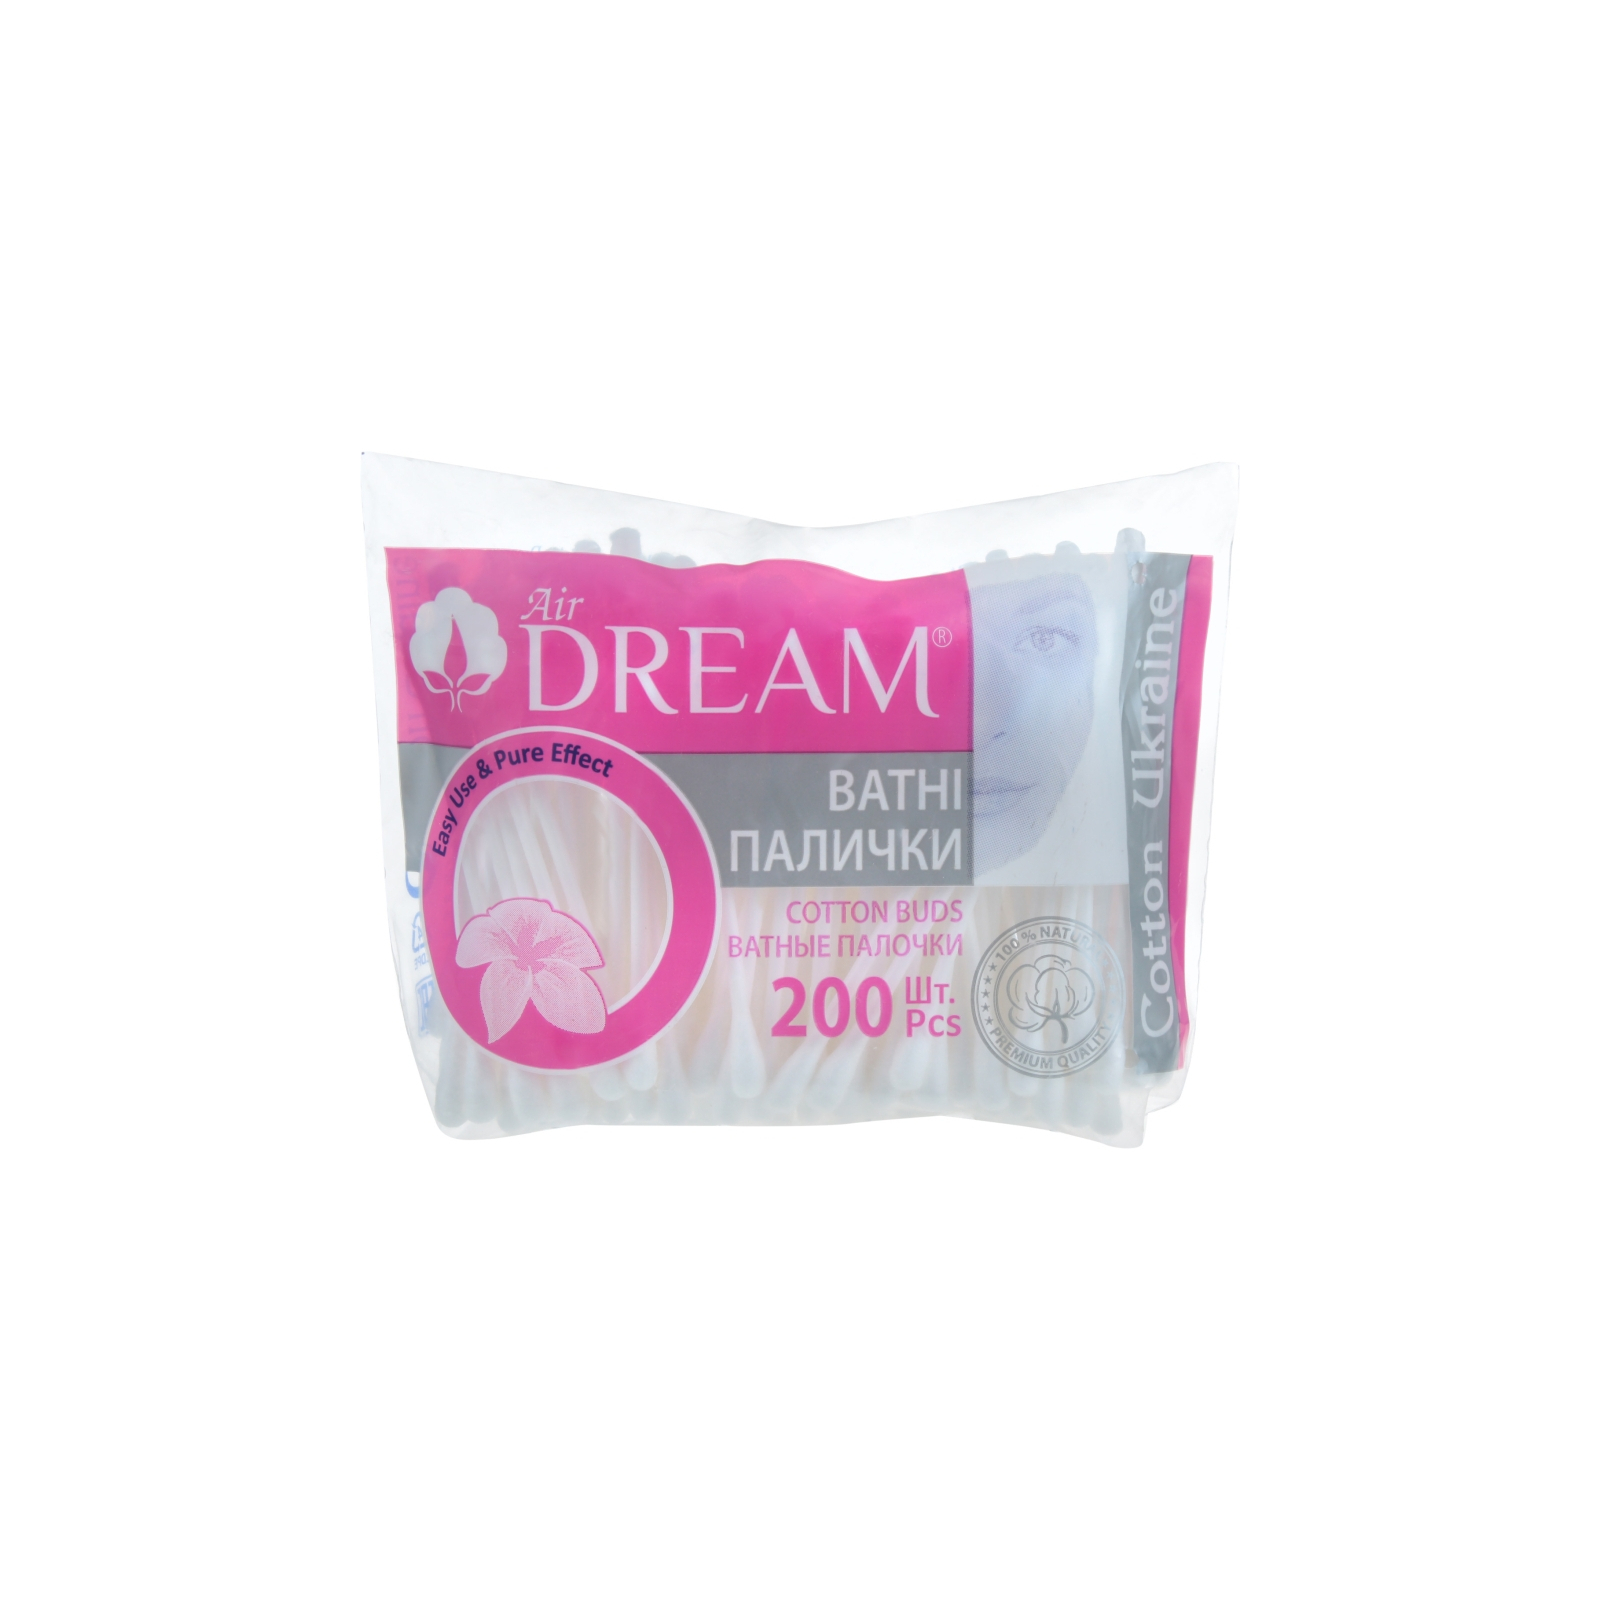 Ватные палочки Air Dream В пакете 200 шт. (4820194350301)